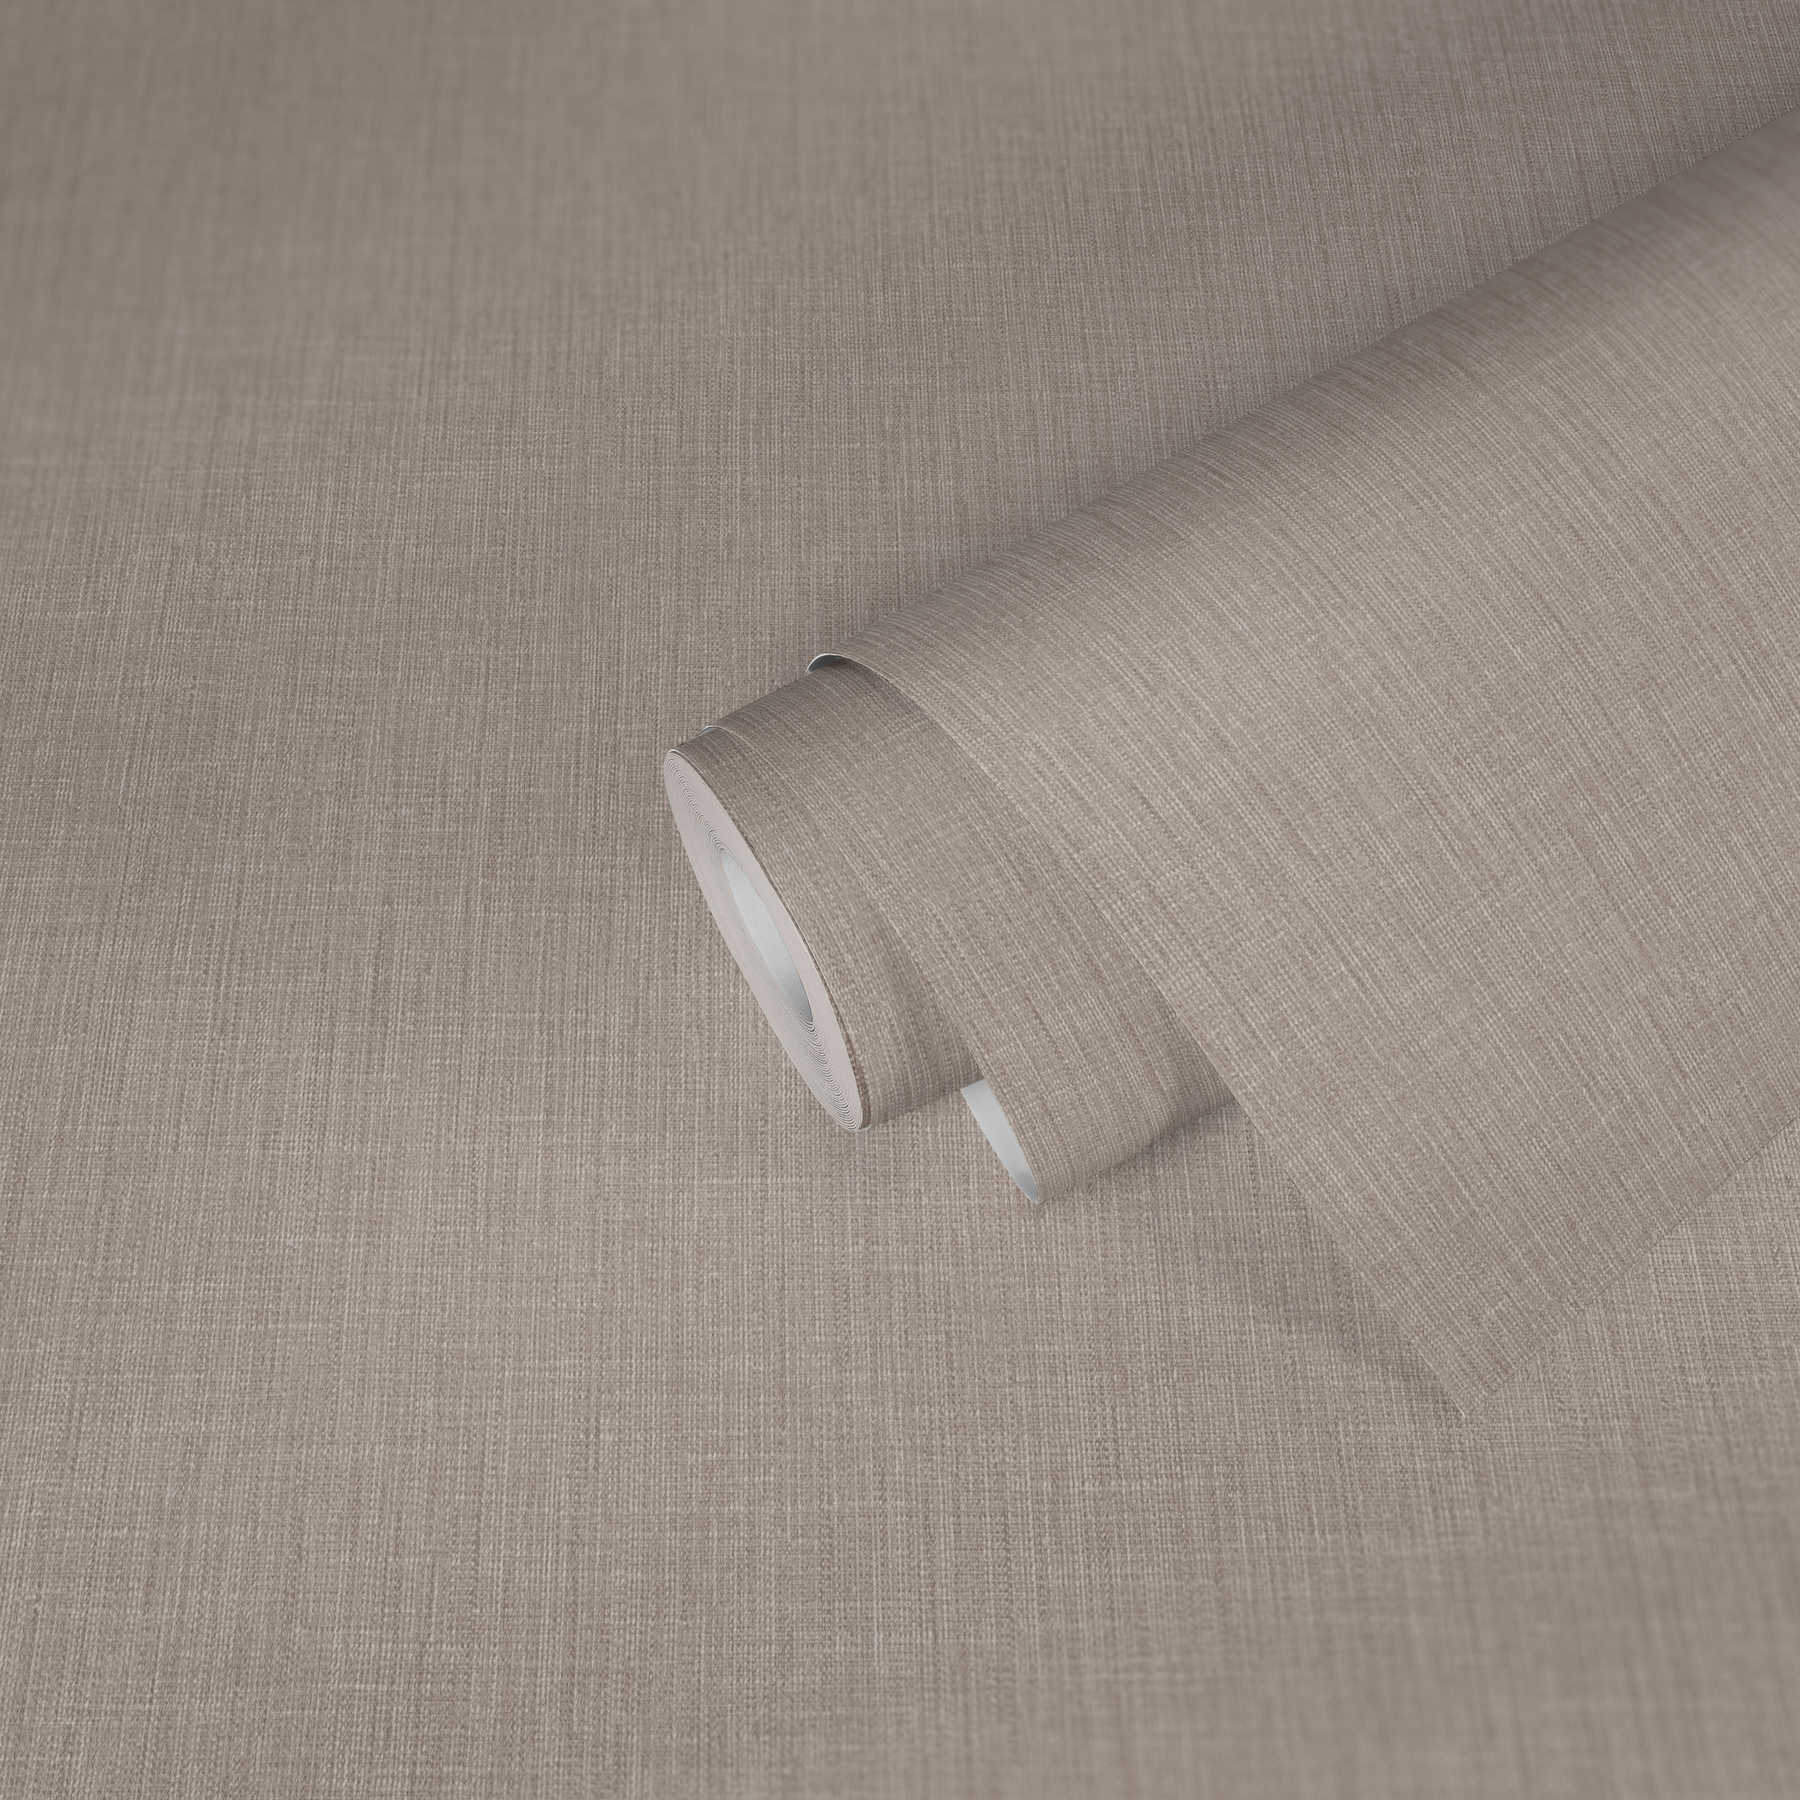             Non-woven wallpaper fabric look, mottled - beige, cream, white
        